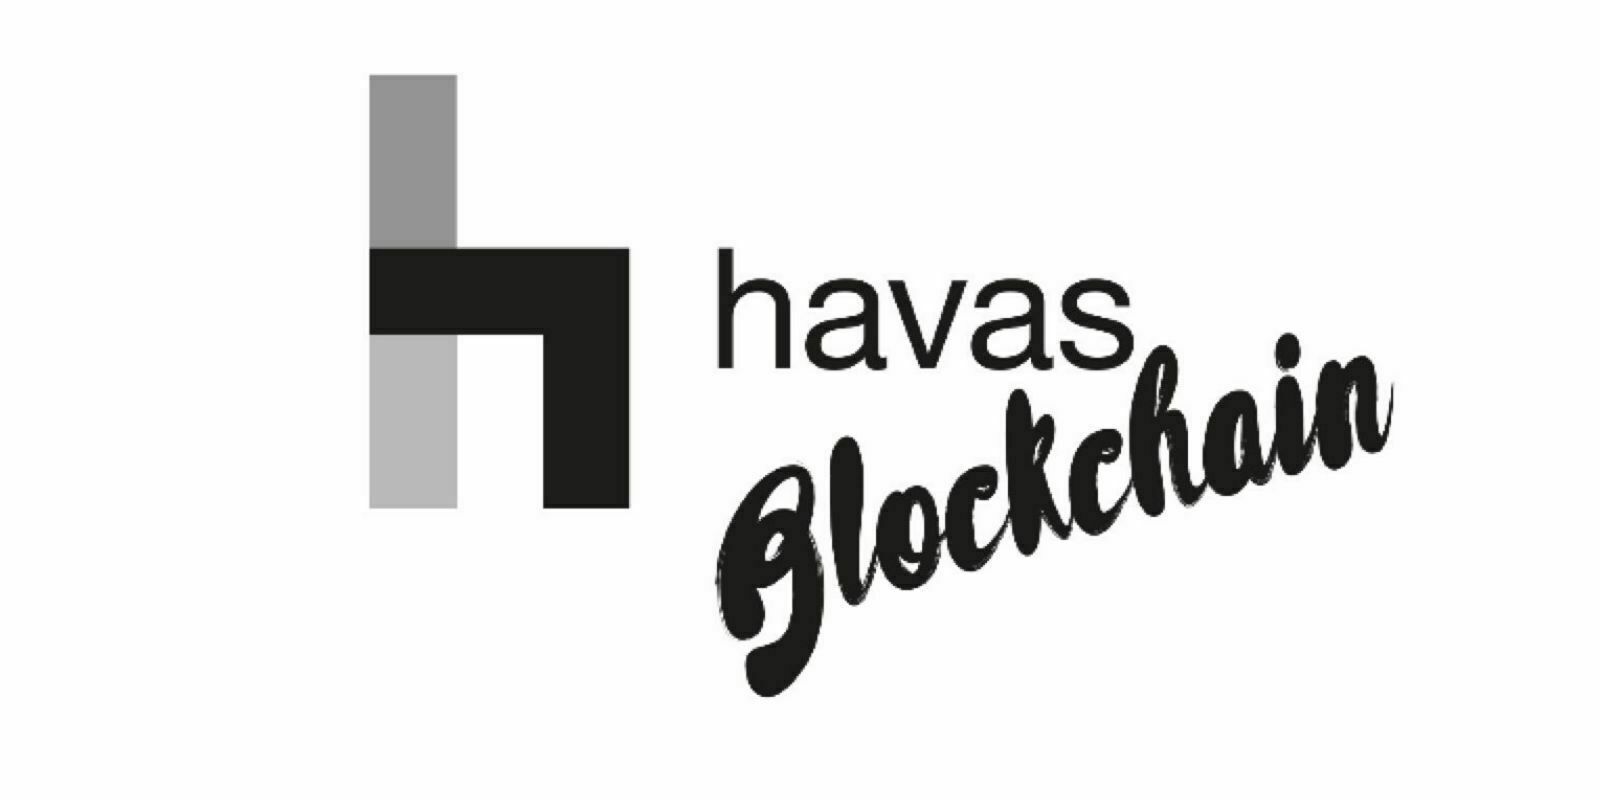 Qu'est-ce que Havas Blockchain, que proposent-ils ?